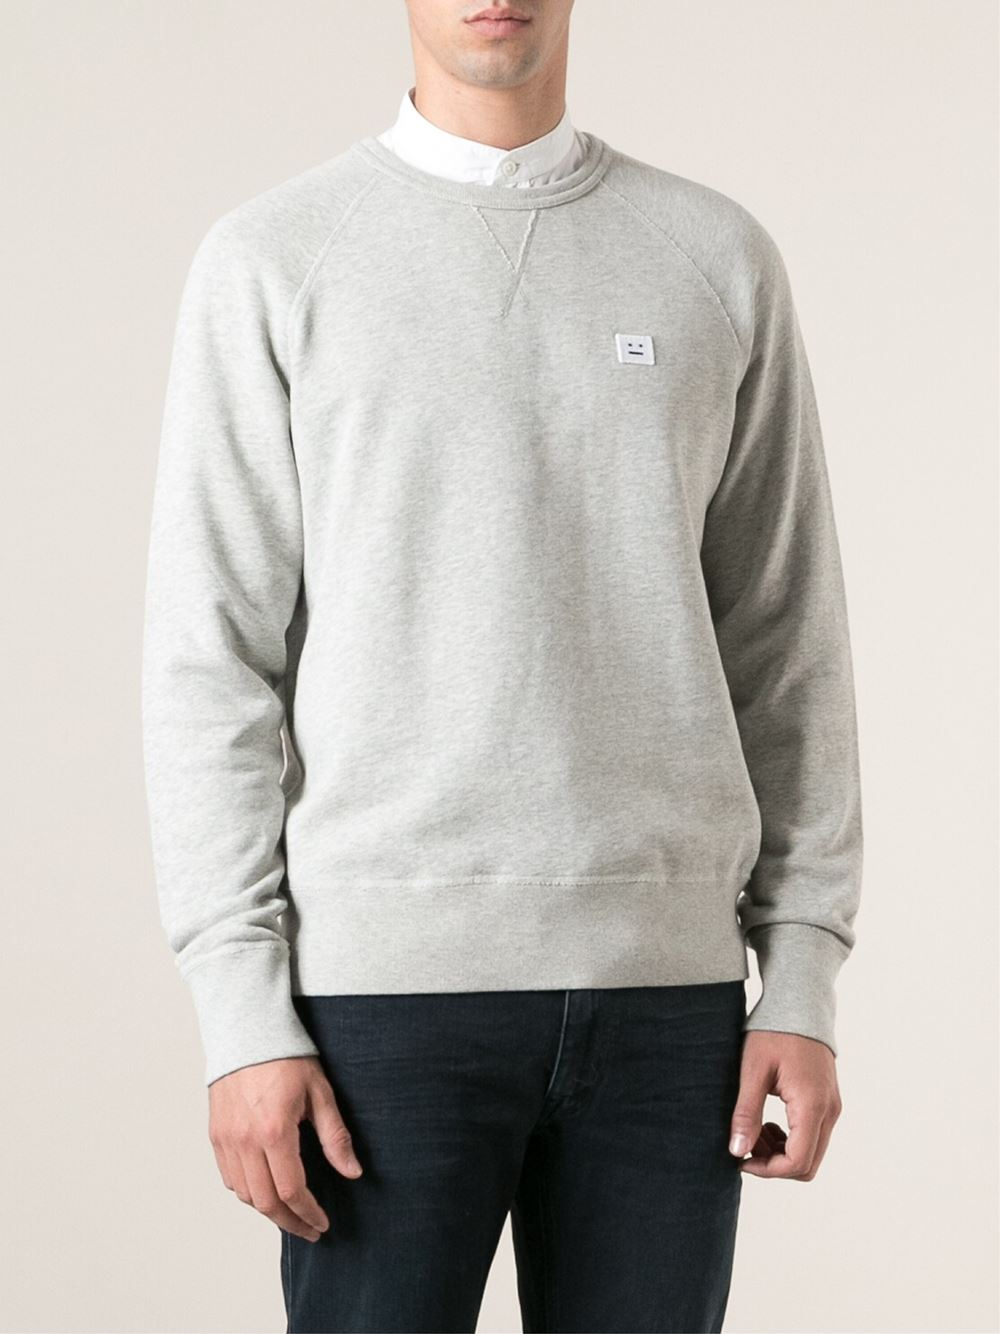 Acne Studios College Face Sweatshirt in Grey (Gray) for Men - Lyst